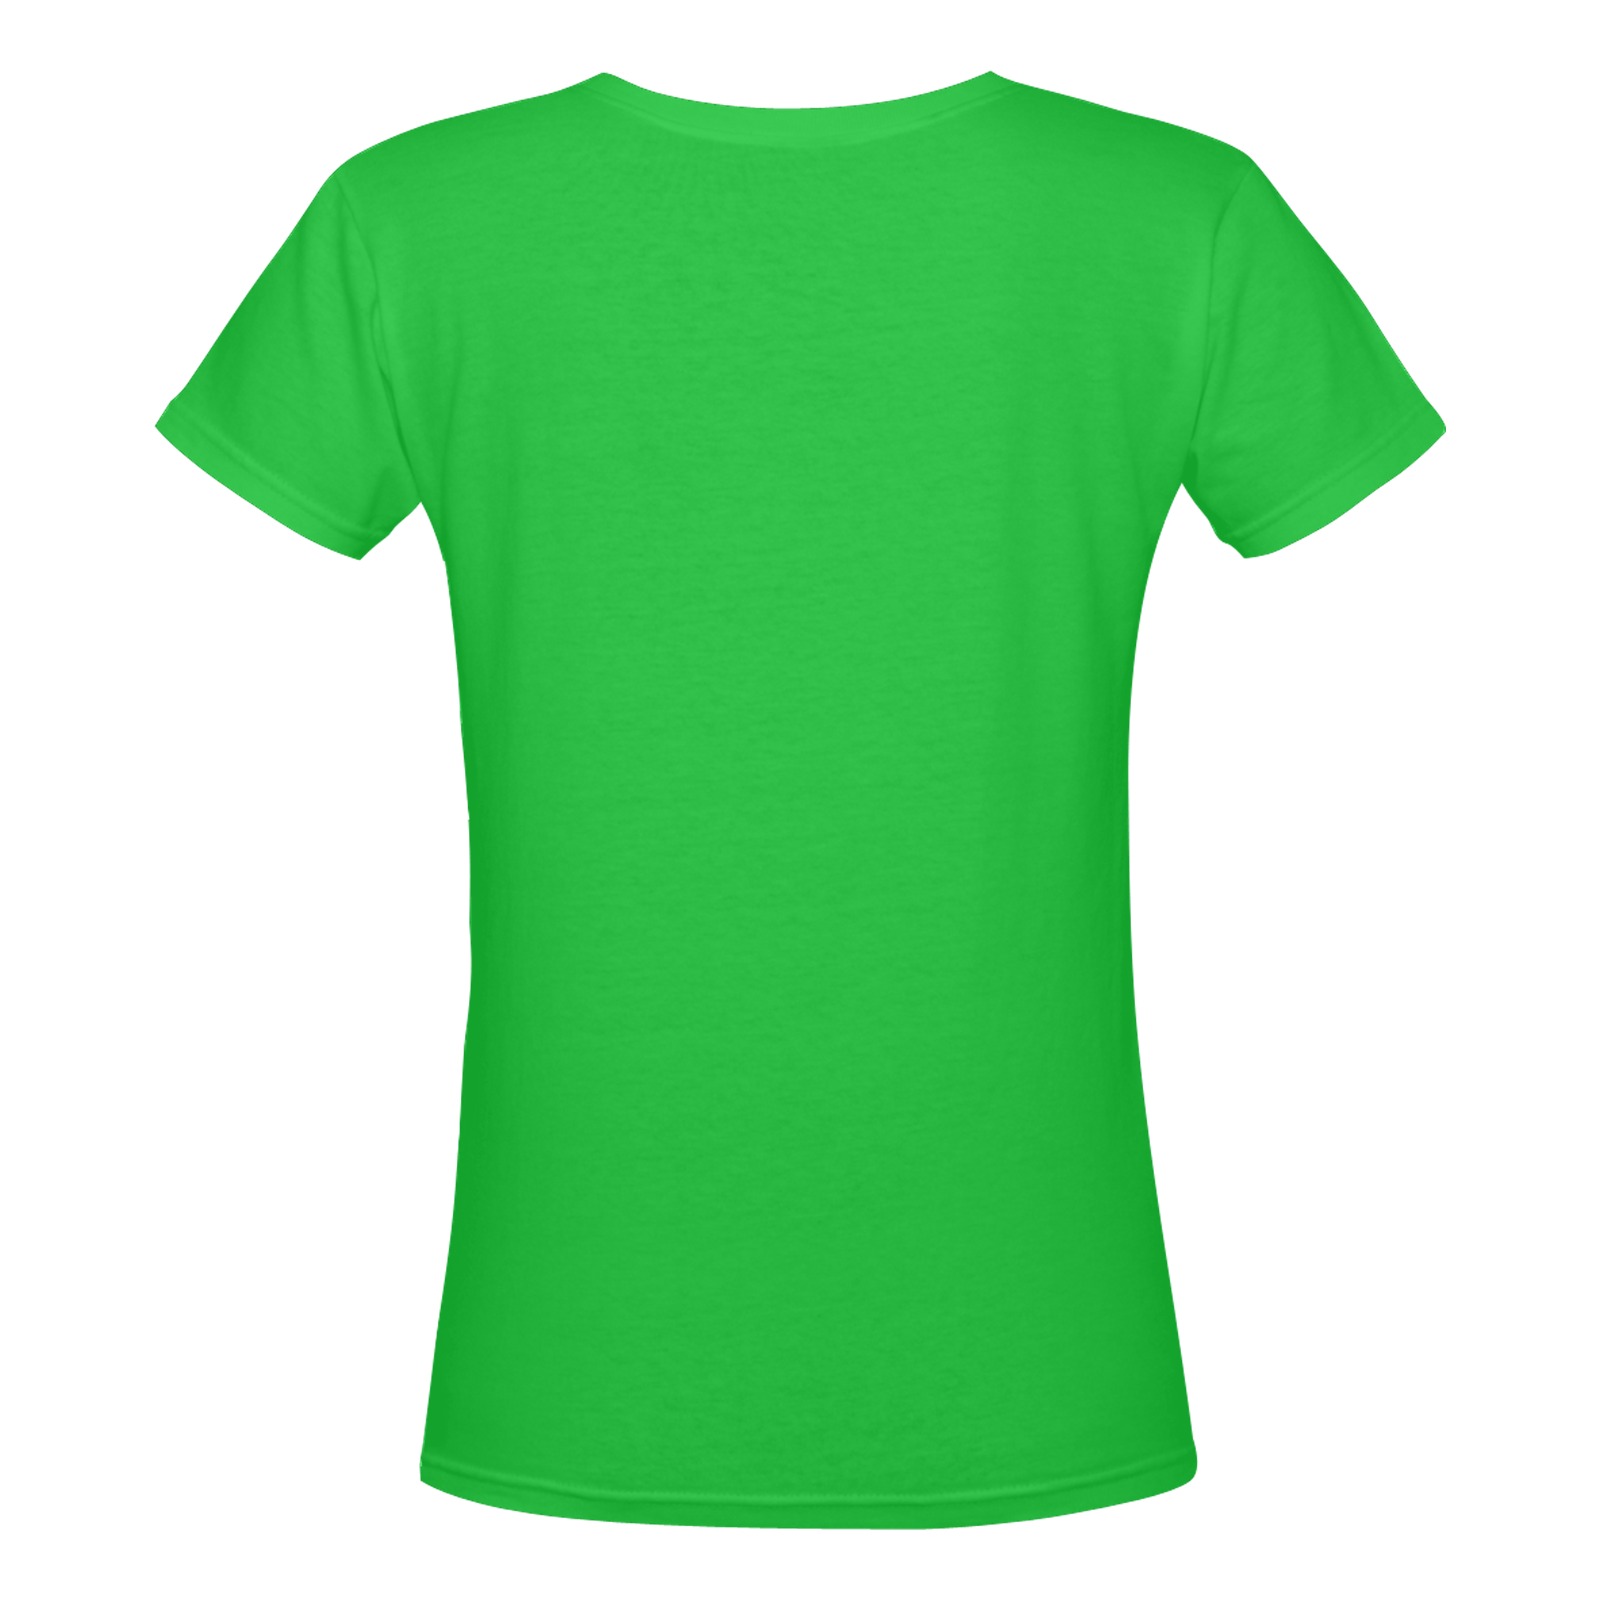 Eat Drink Dance Breakdance Green Women's Deep V-neck T-shirt (Model T19)